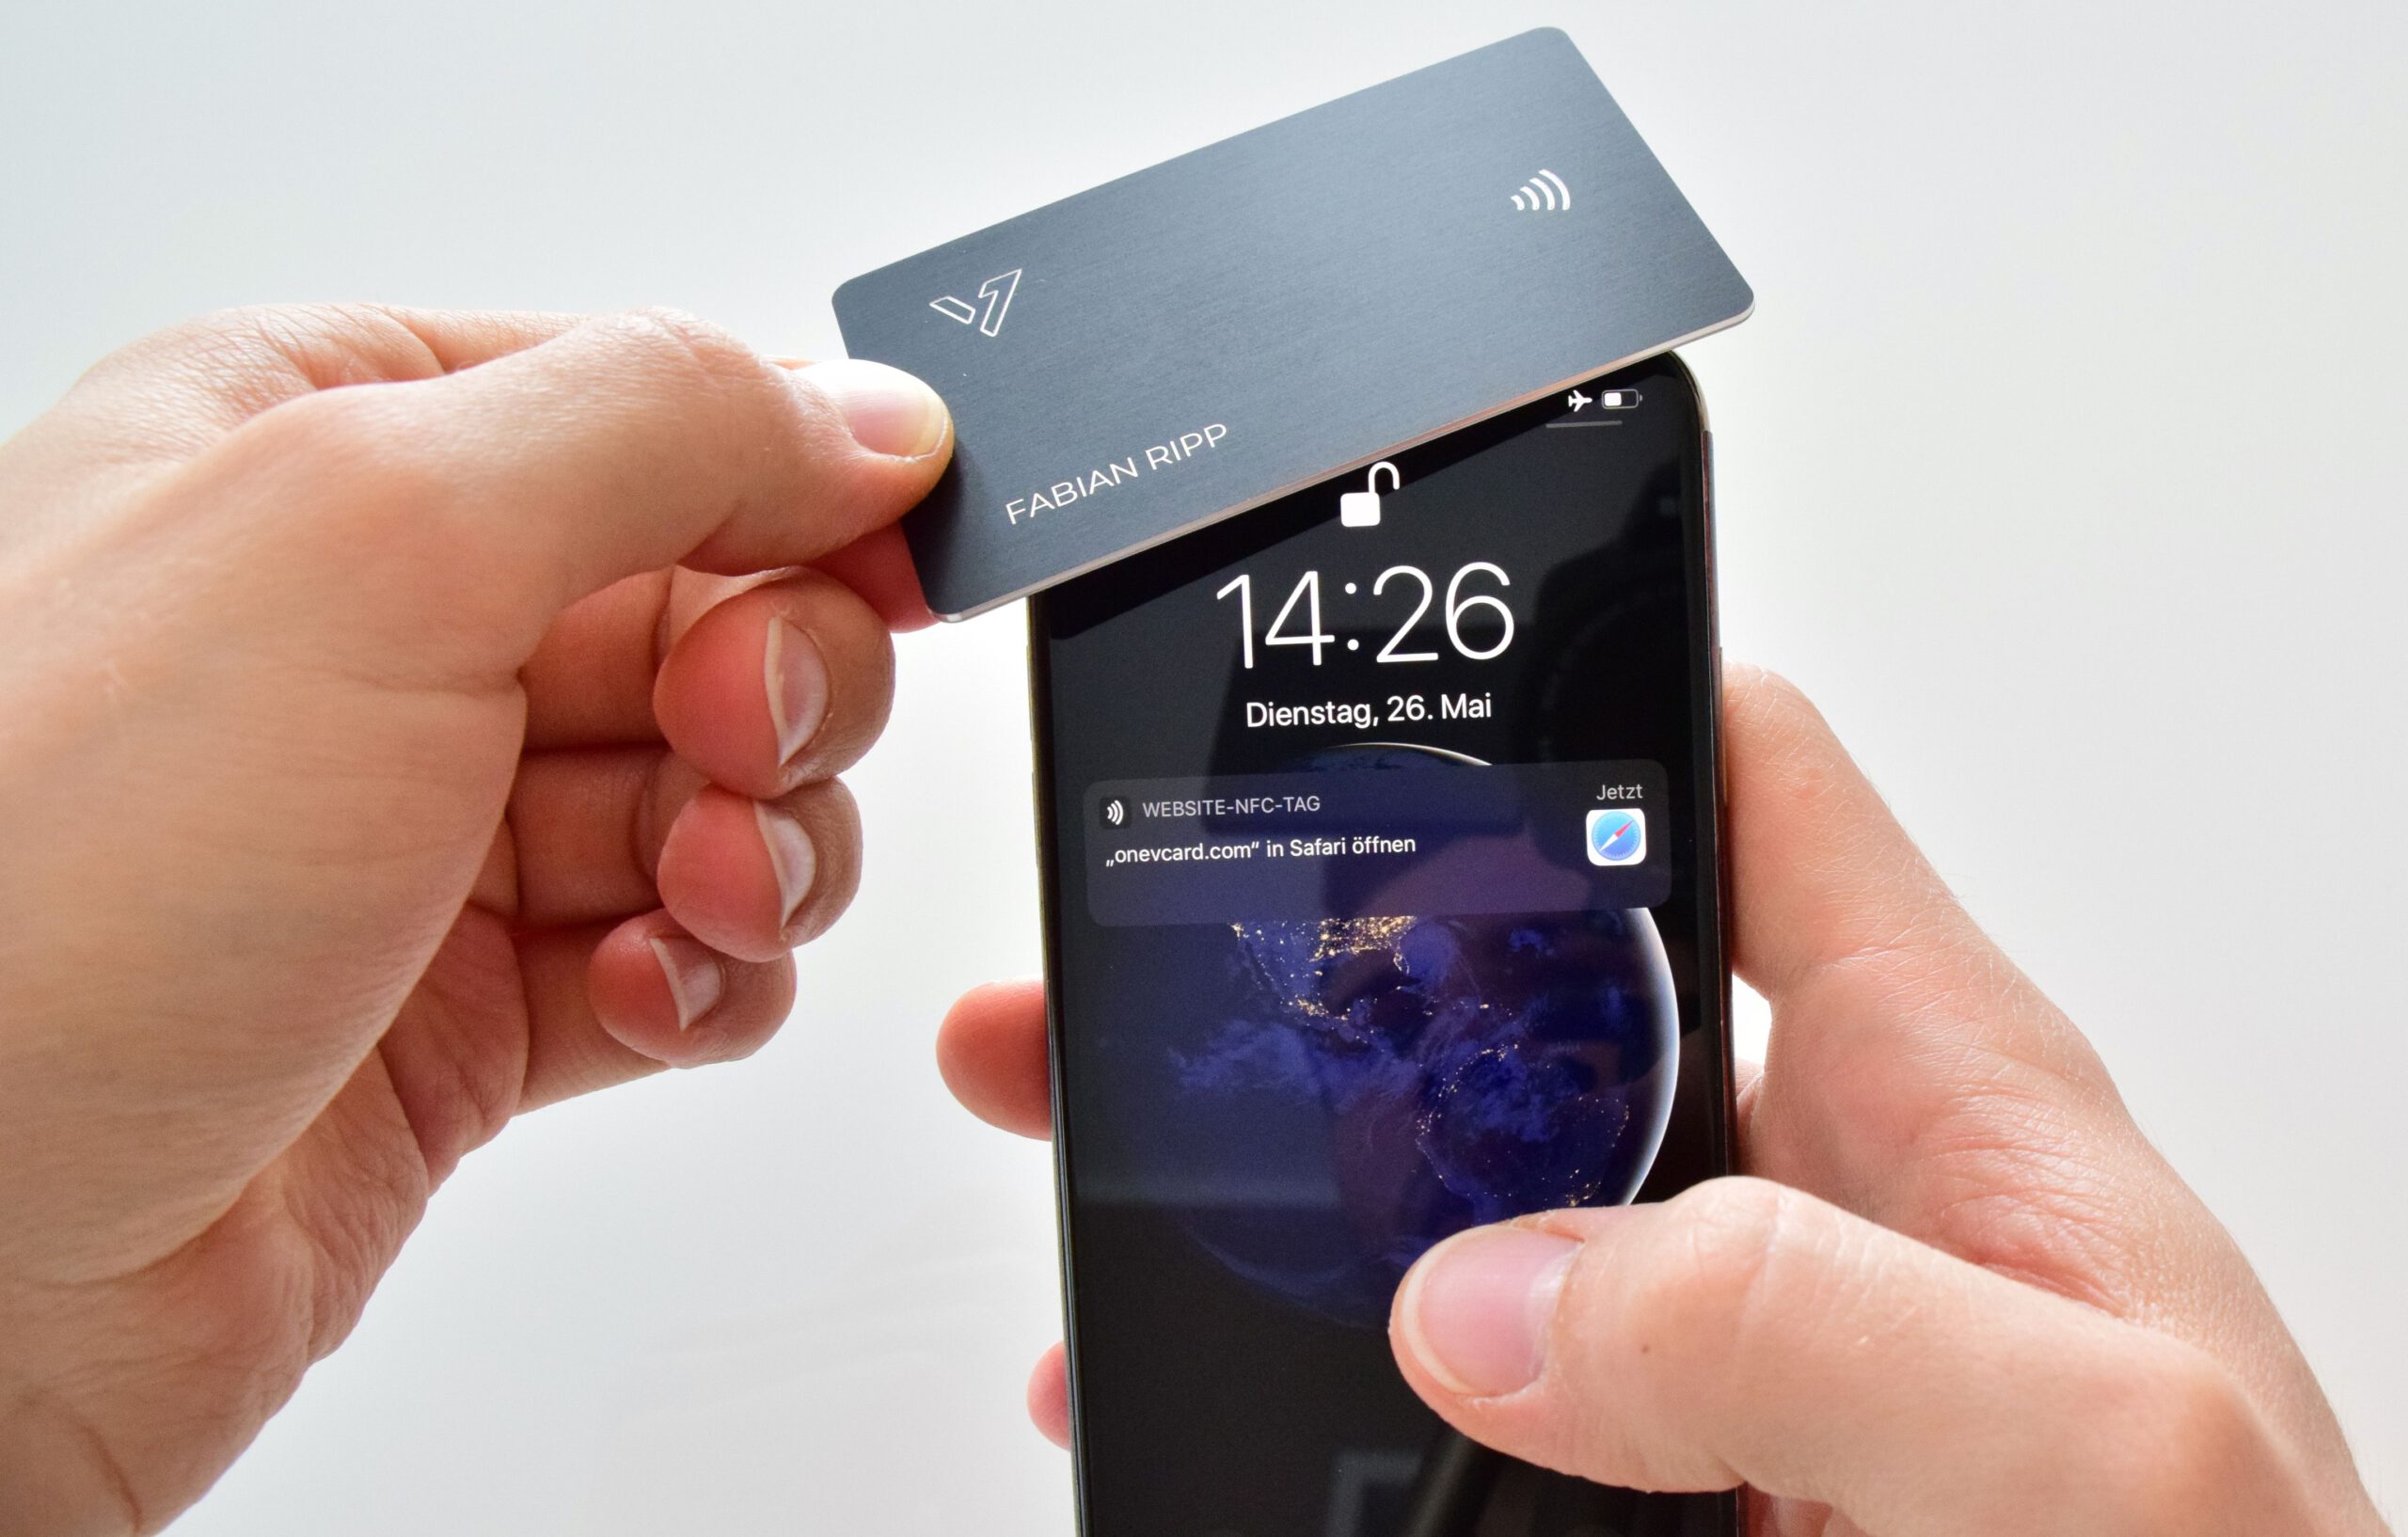 Metall Visitenkarte wird an das Handy gehalten um den QR-Code über NFC zu scannen